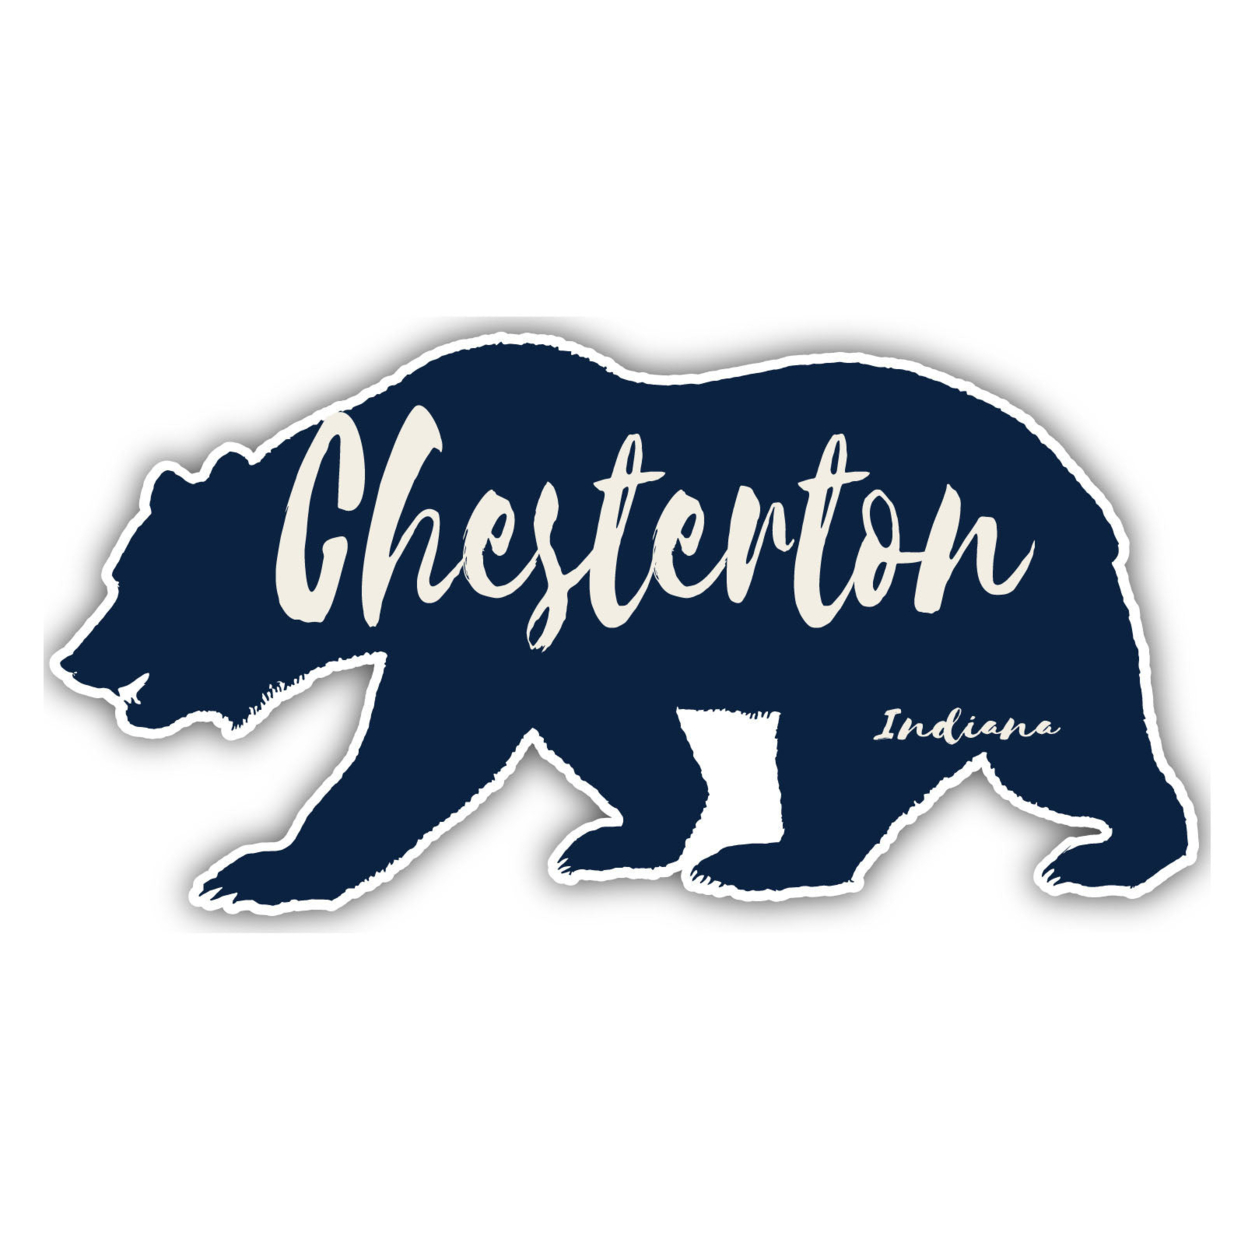 Chesterton Indiana Souvenir Decorative Stickers (Choose Theme And Size) - Single Unit, 6-Inch, Tent